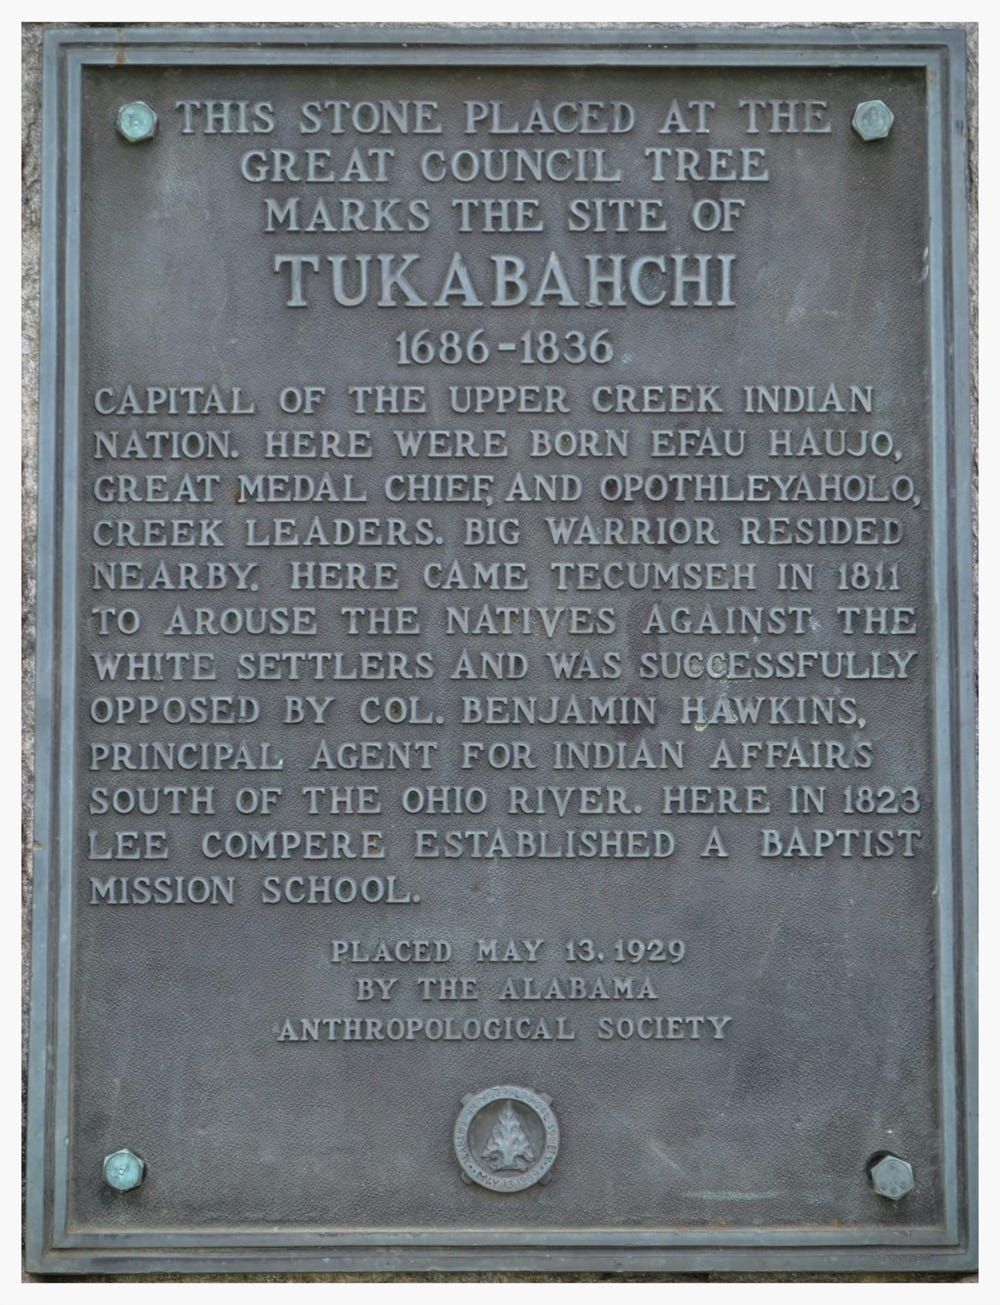 Old Tukabahchi marker, Tallassee, Elmore County, Alabama